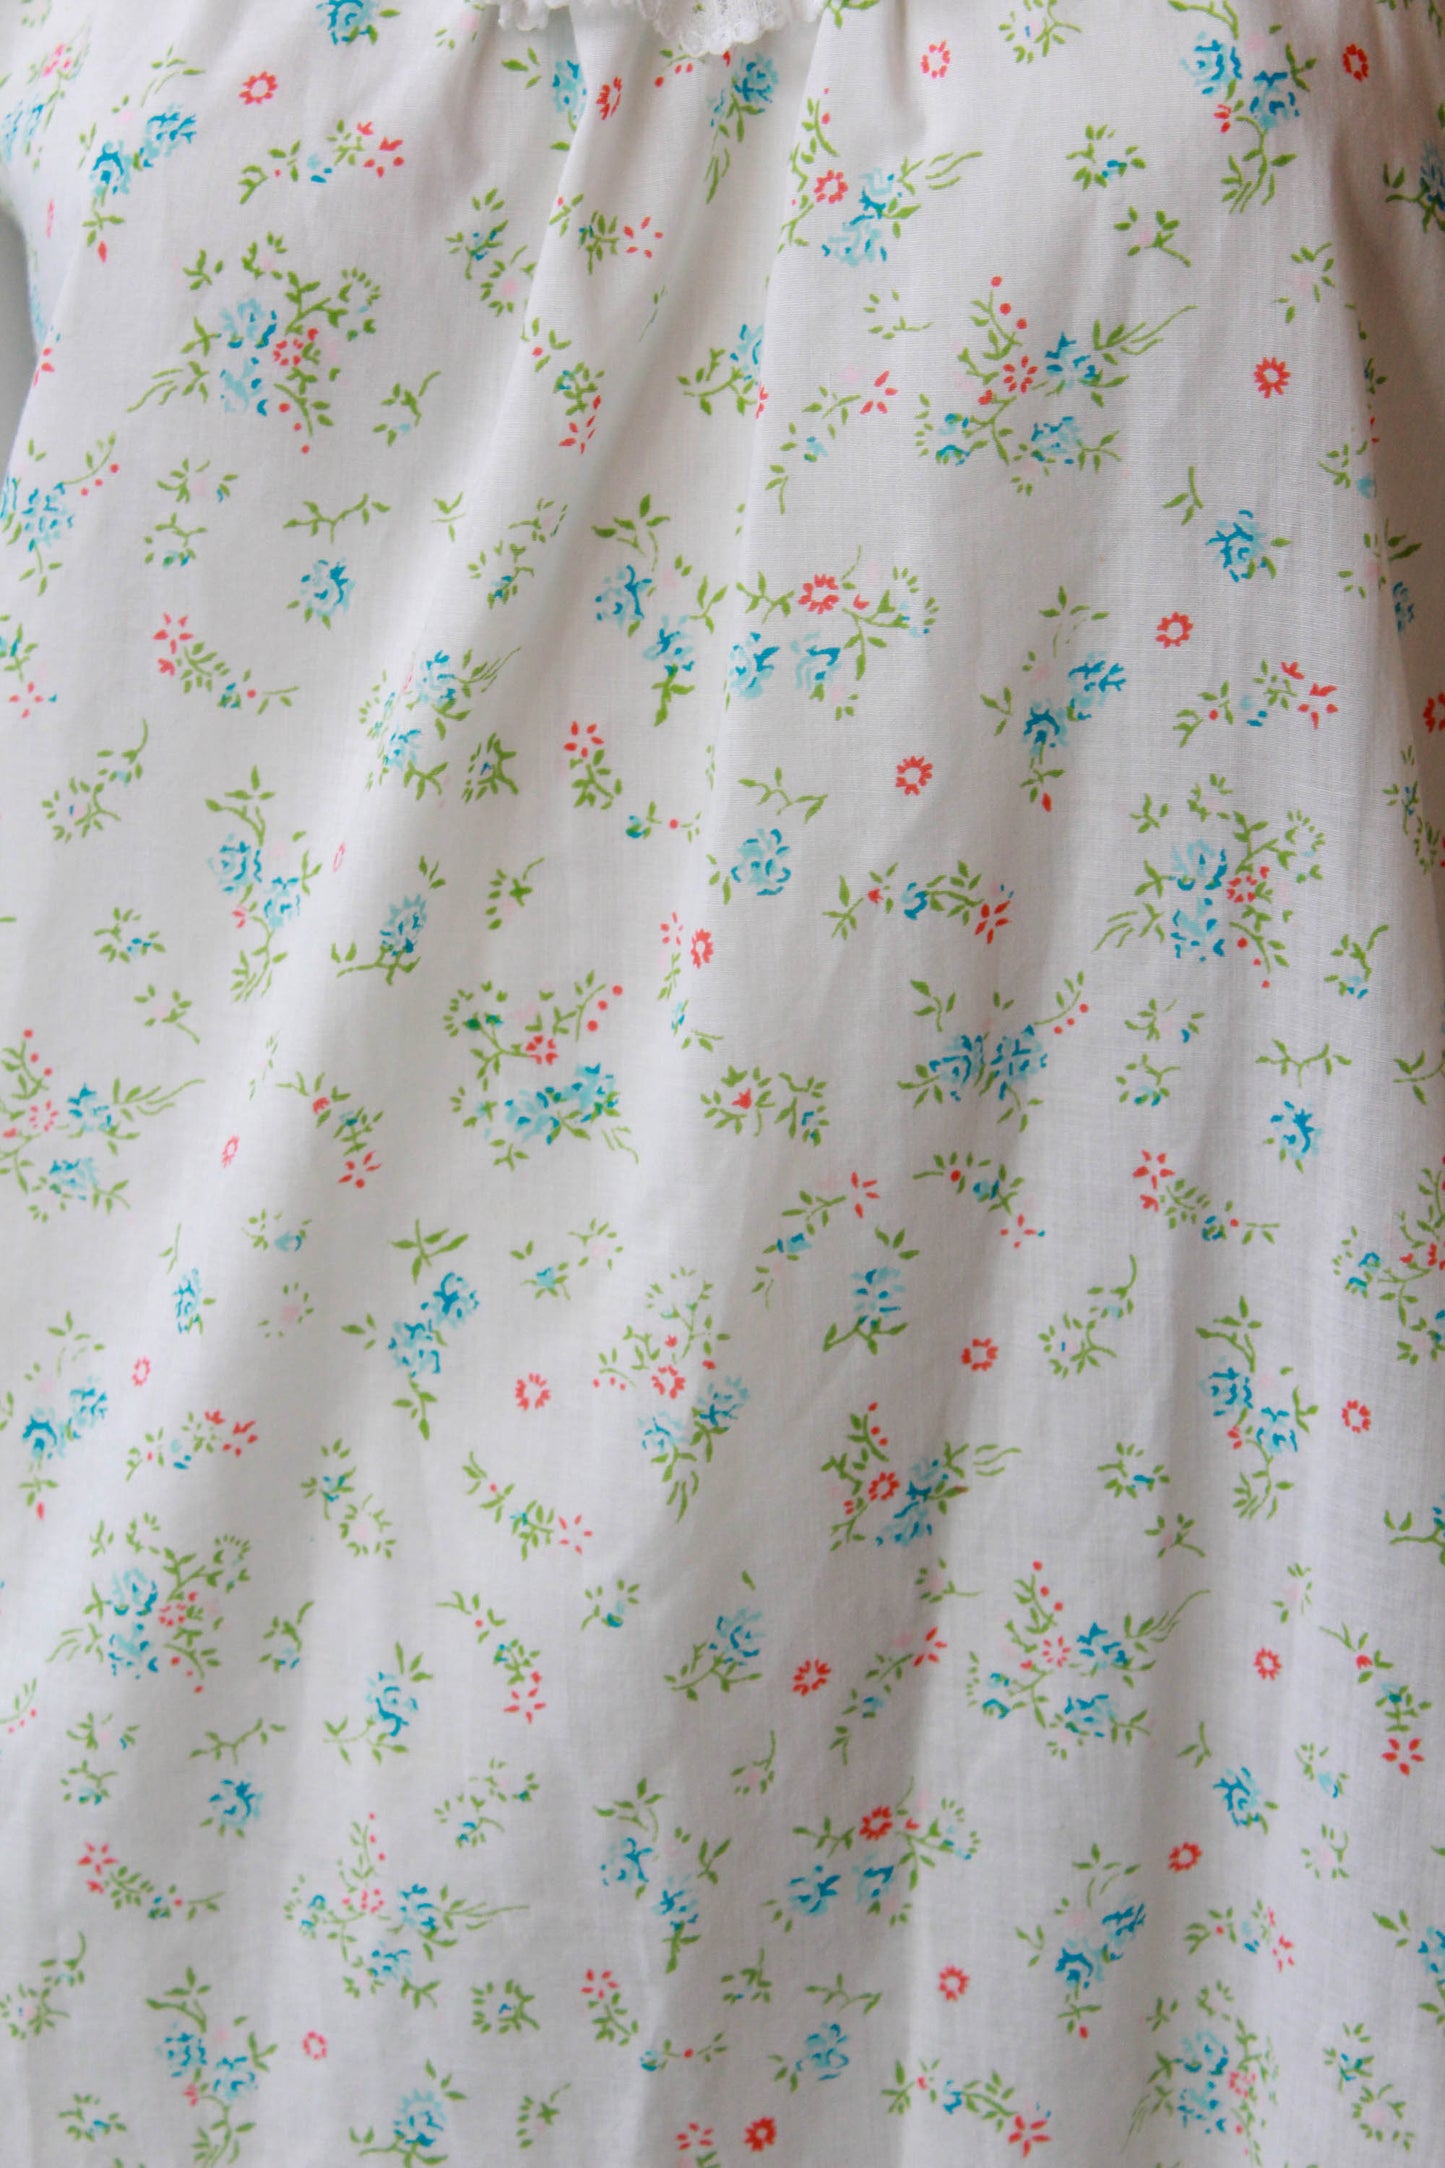 1970s White Floral Print Maxi Night Gown, Lace Ruffle Neckline, M/L